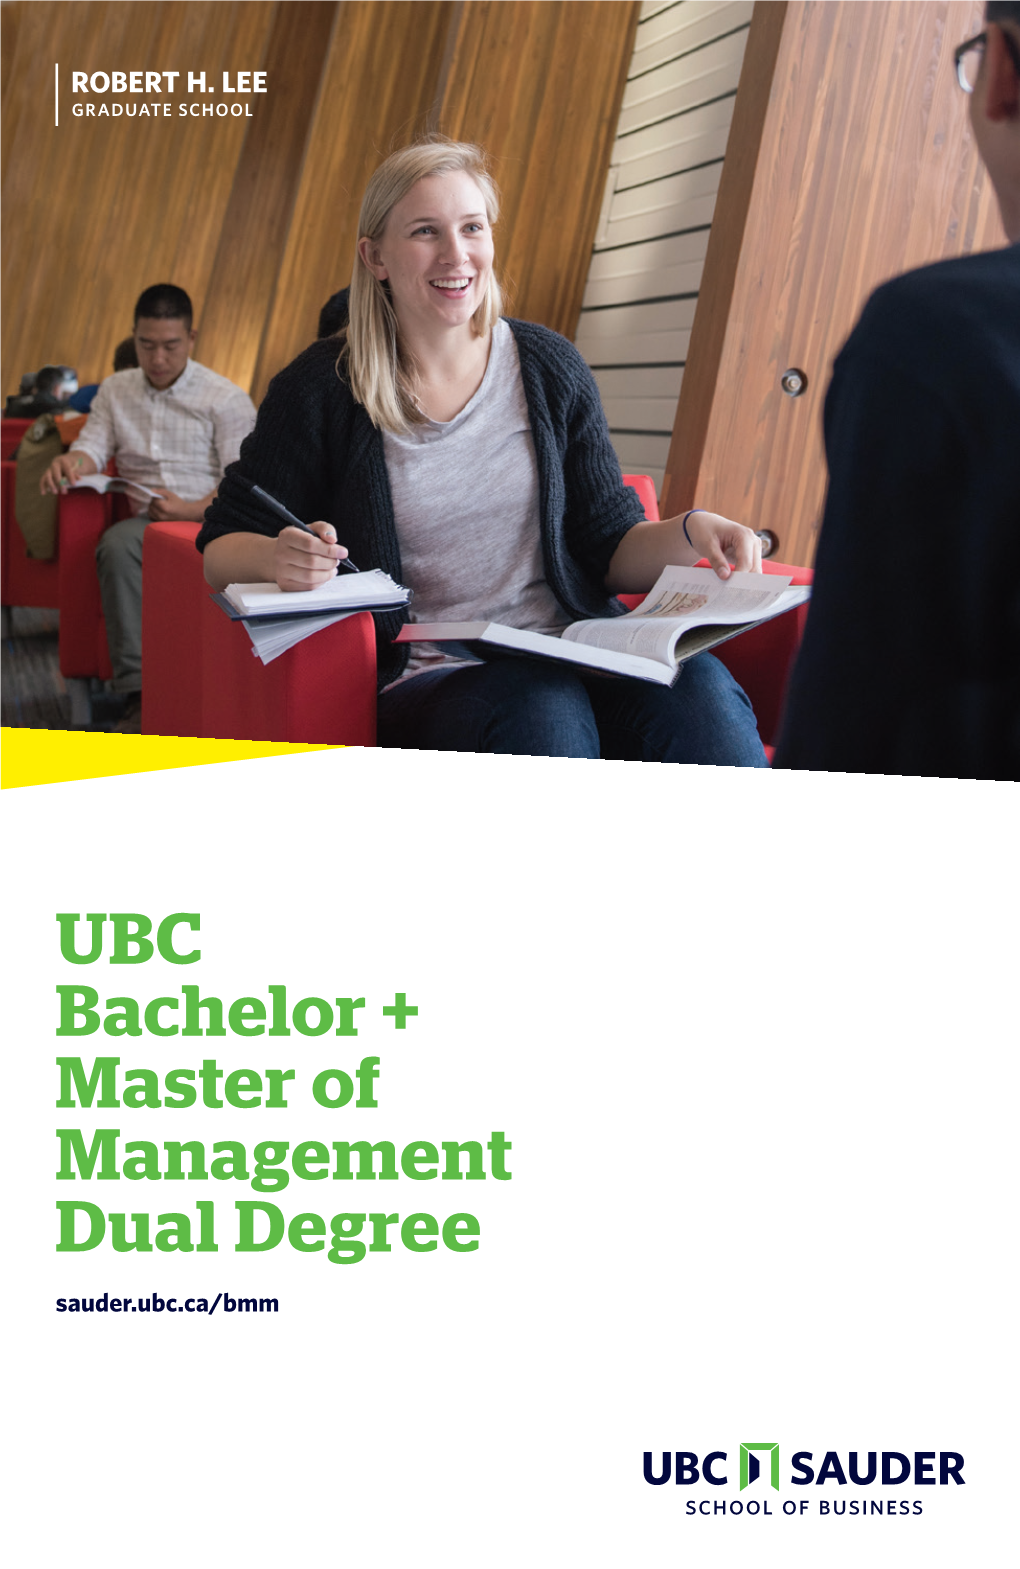 UBC Bachelor + Master of Management Dual Degree Sauder.Ubc.Ca/Bmm Discover the UBC Bachelor + Master of Management Dual Degree